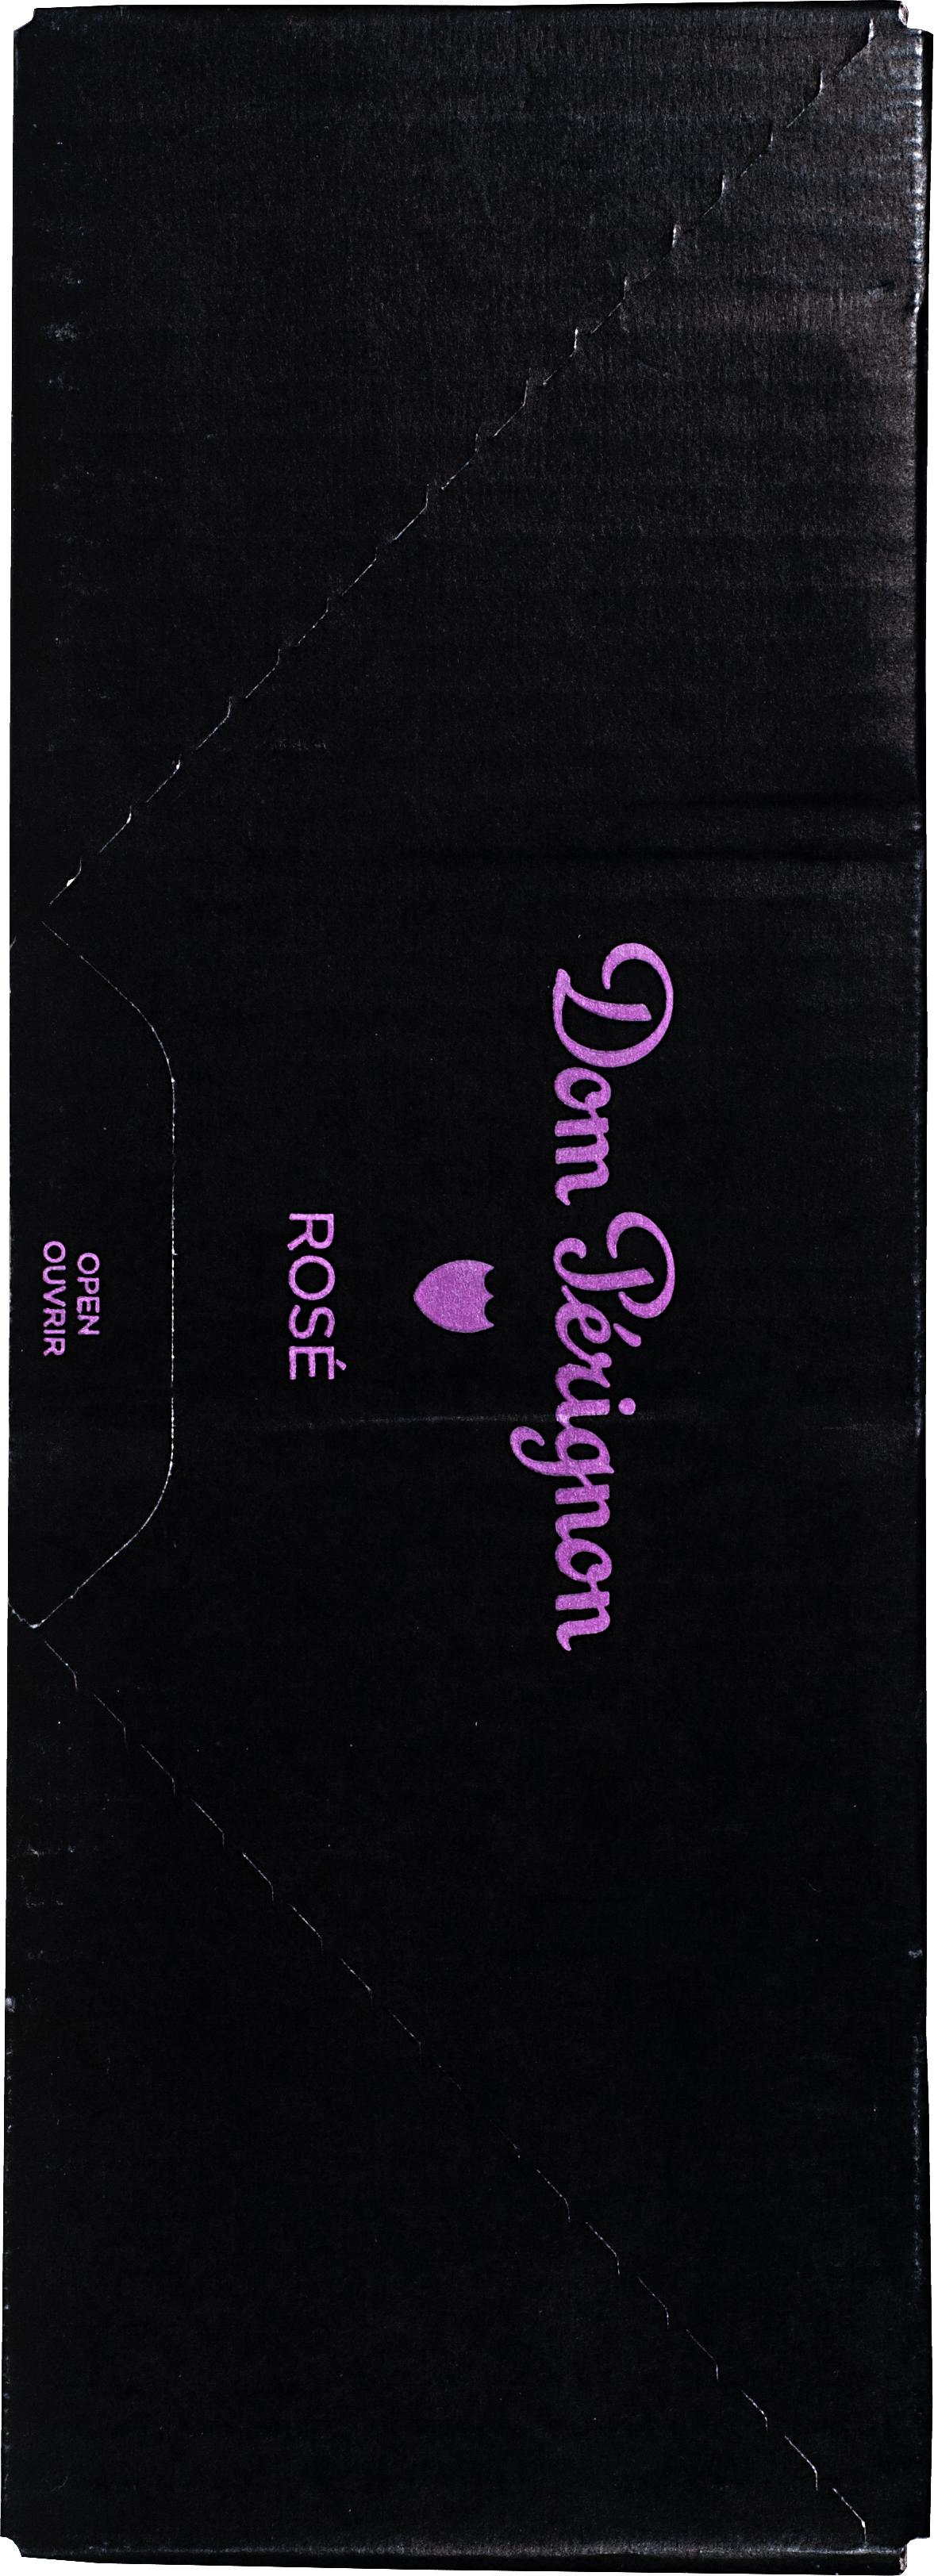 1996 Dom Pérignon P2 Rosé - Razor Sharp Price – Crush Wine & Spirits